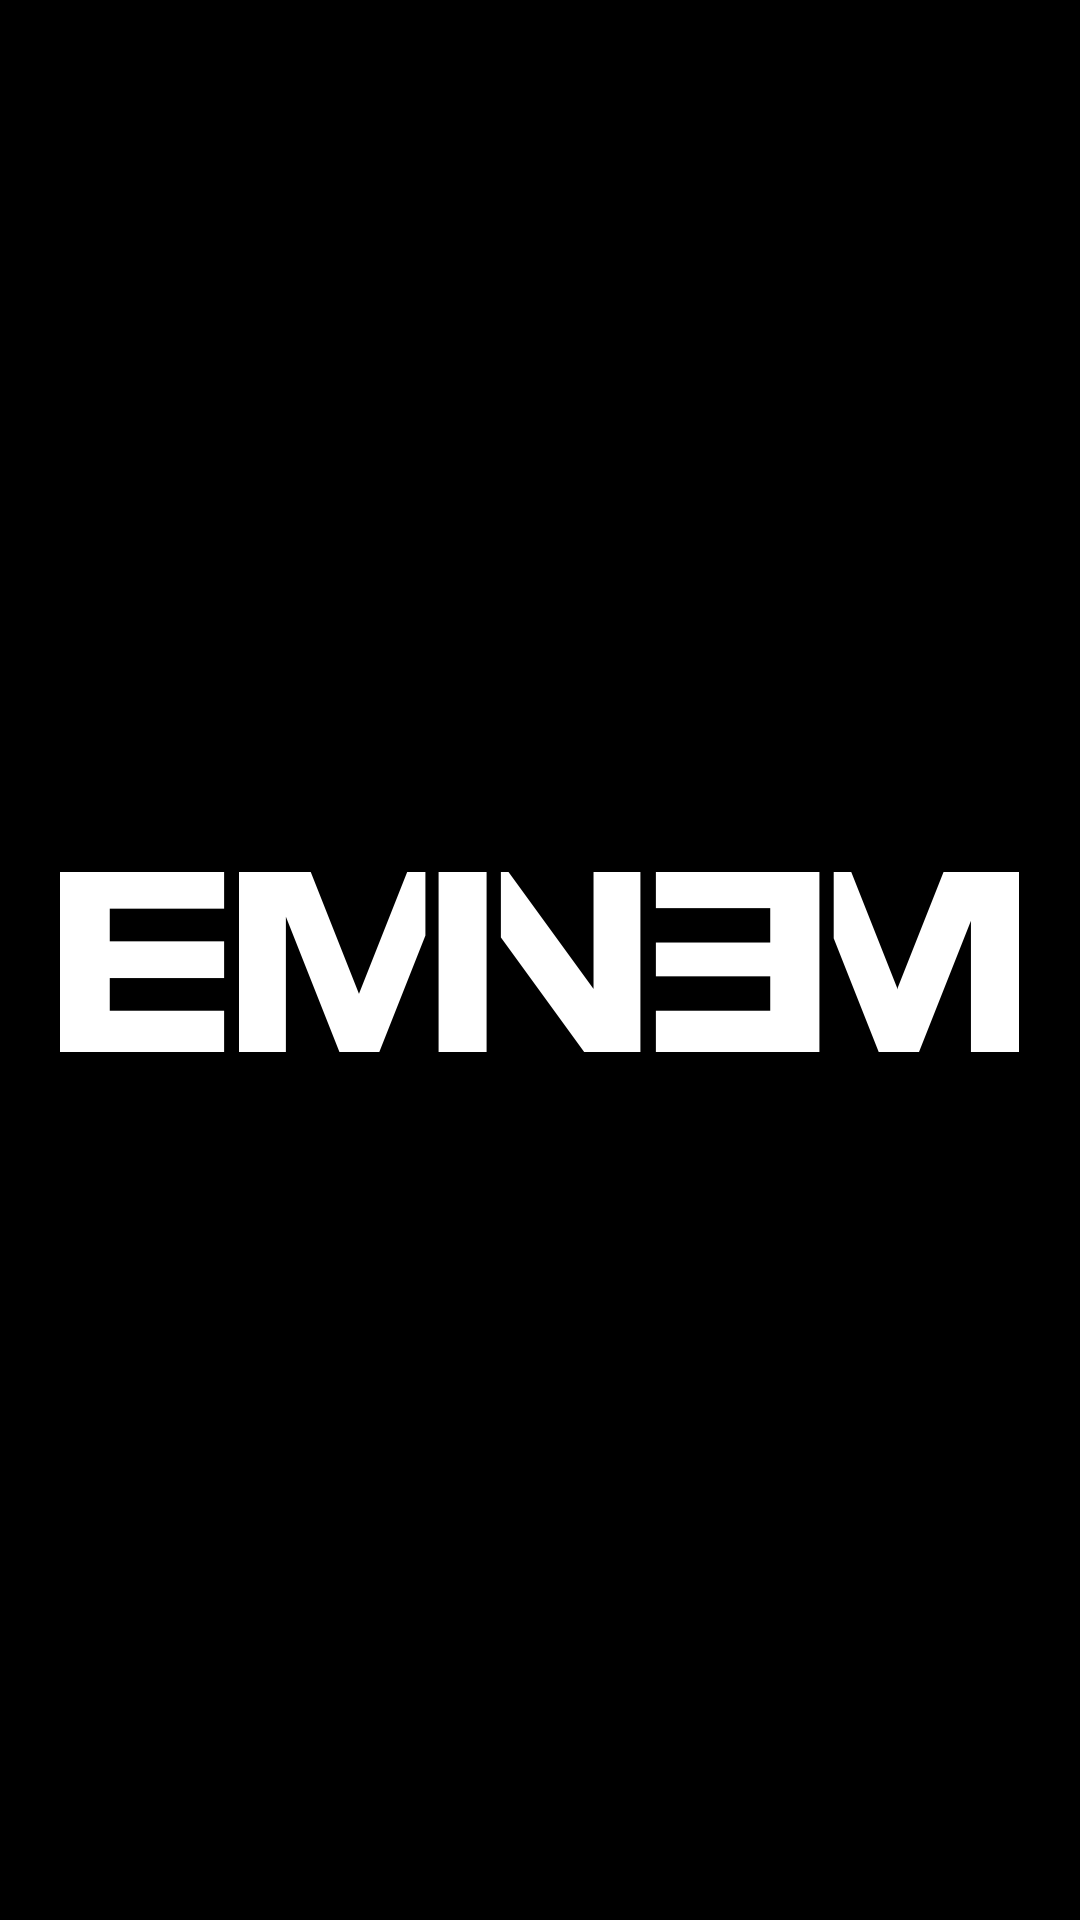 Eminem IPhone Wallpaper Group Wallpaper House.com